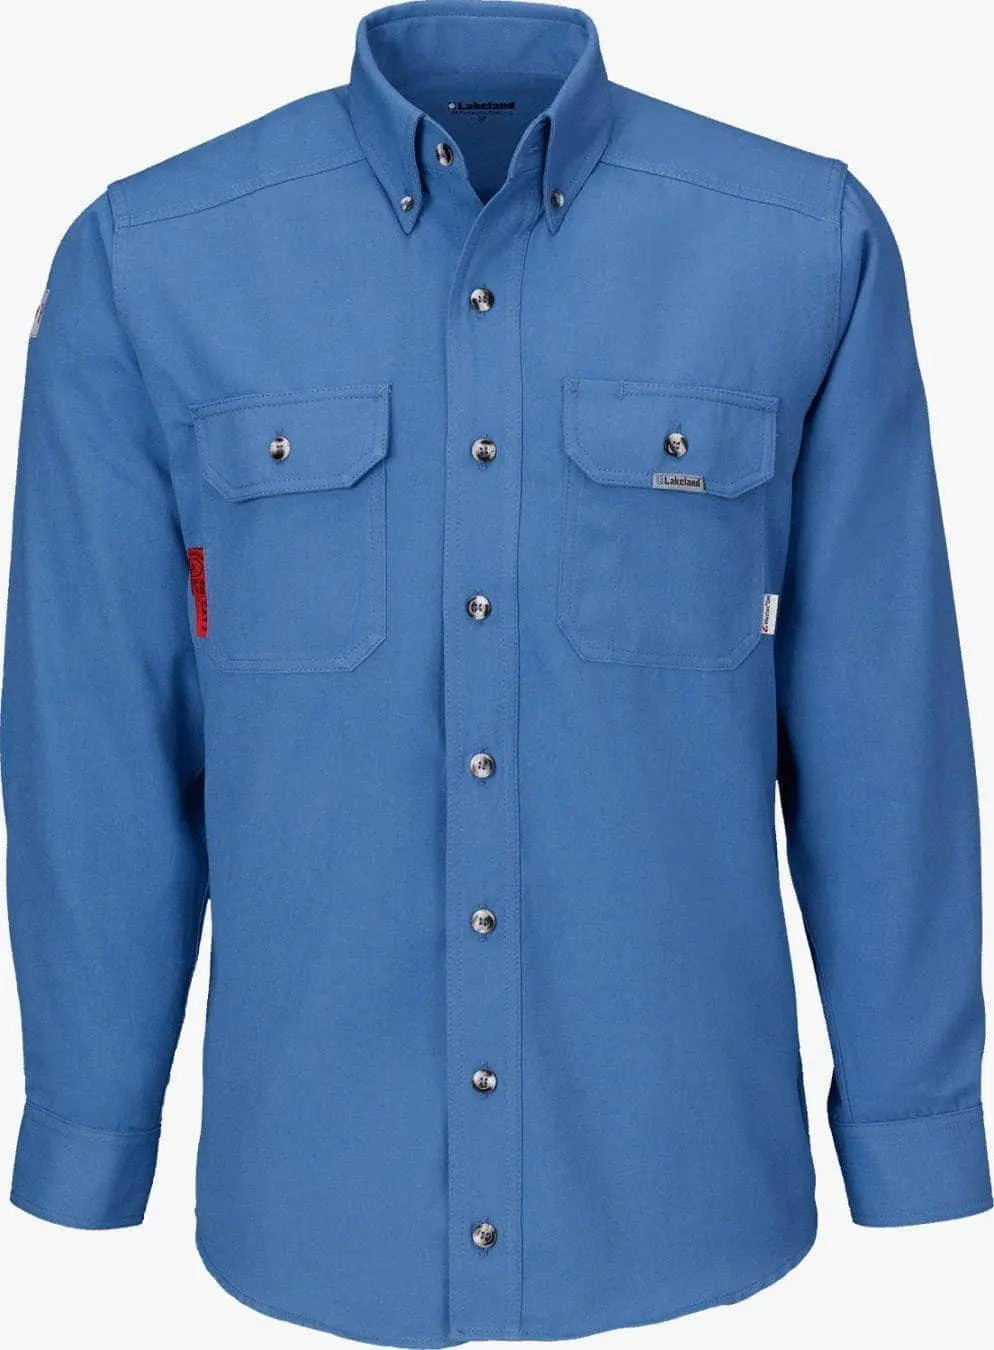 LAKELAND FR - 6.5oz Westex DH Button Up Shirt, Blue - Becker Safety and Supply